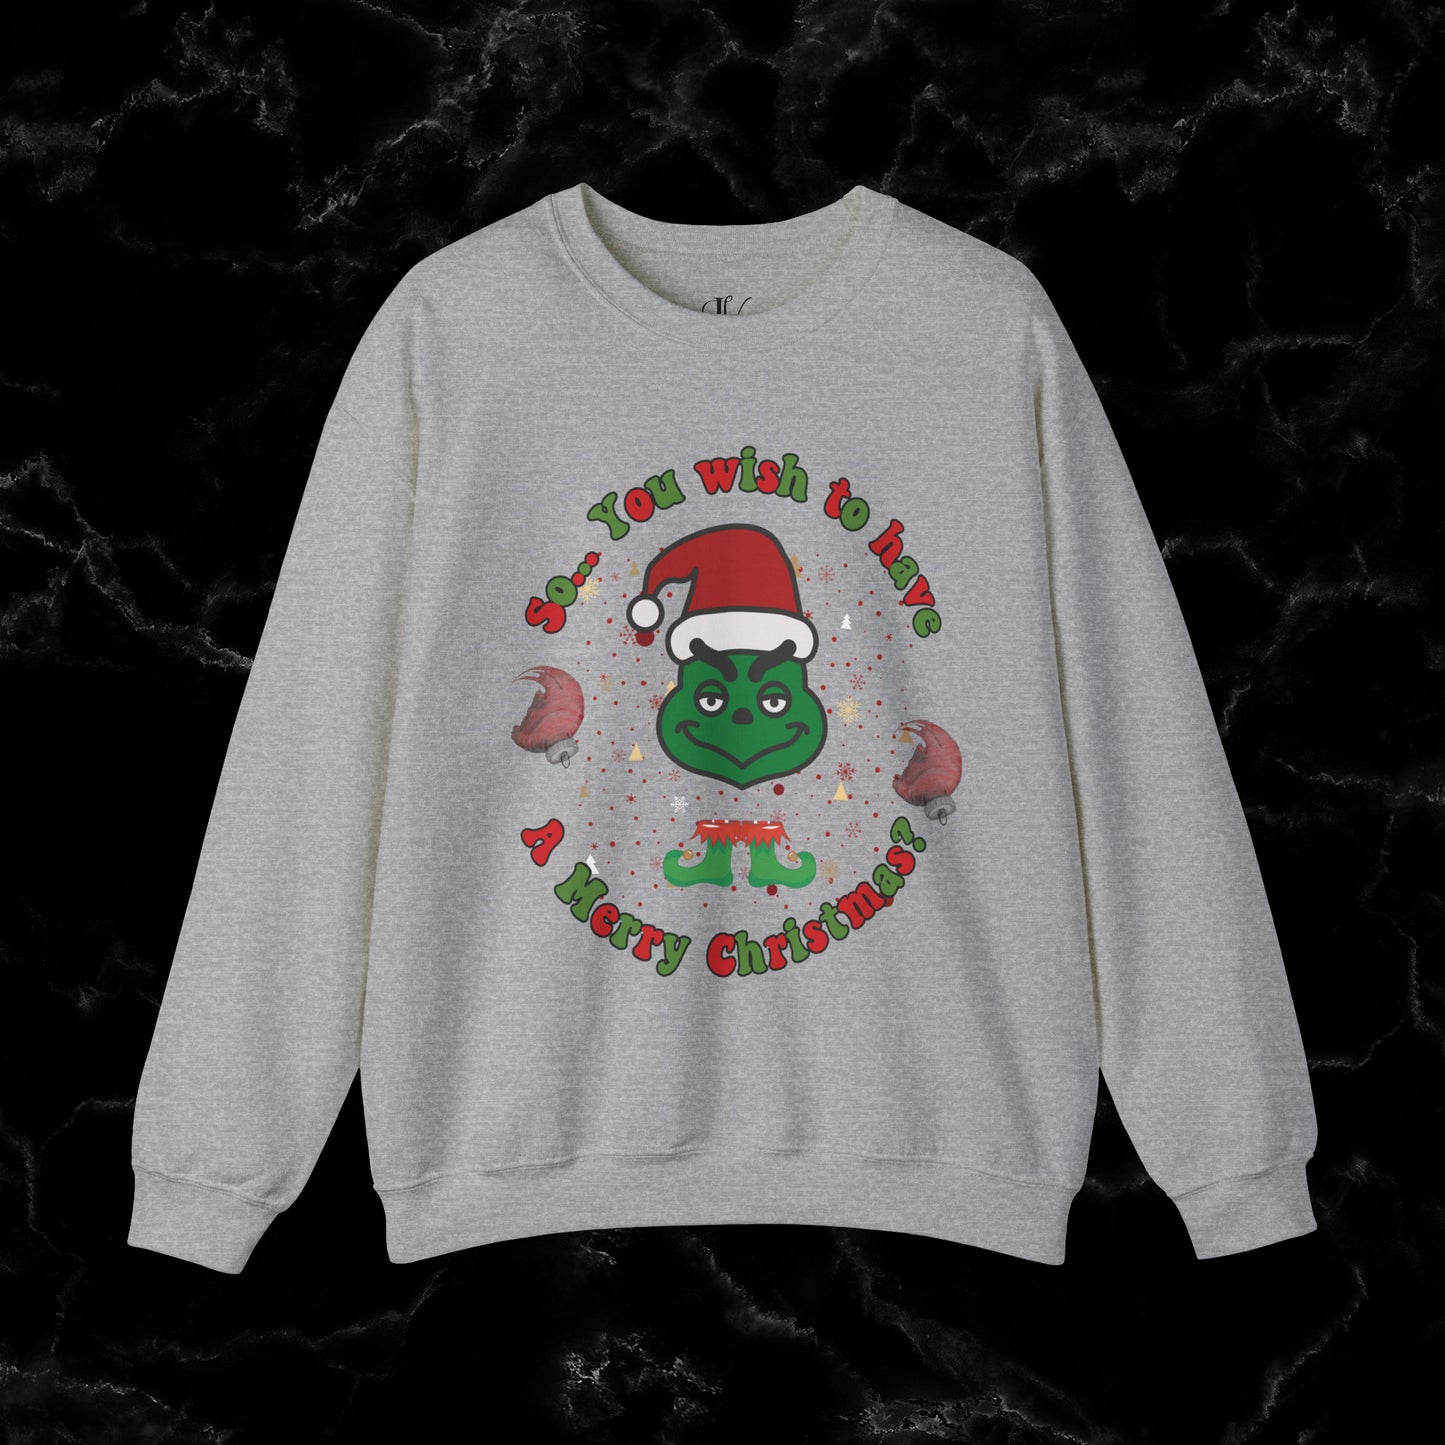 So You Wish To Have Merry Christmas Grinch Sweatshirt - Funny Grinchmas Gift Sweatshirt S Sport Grey 